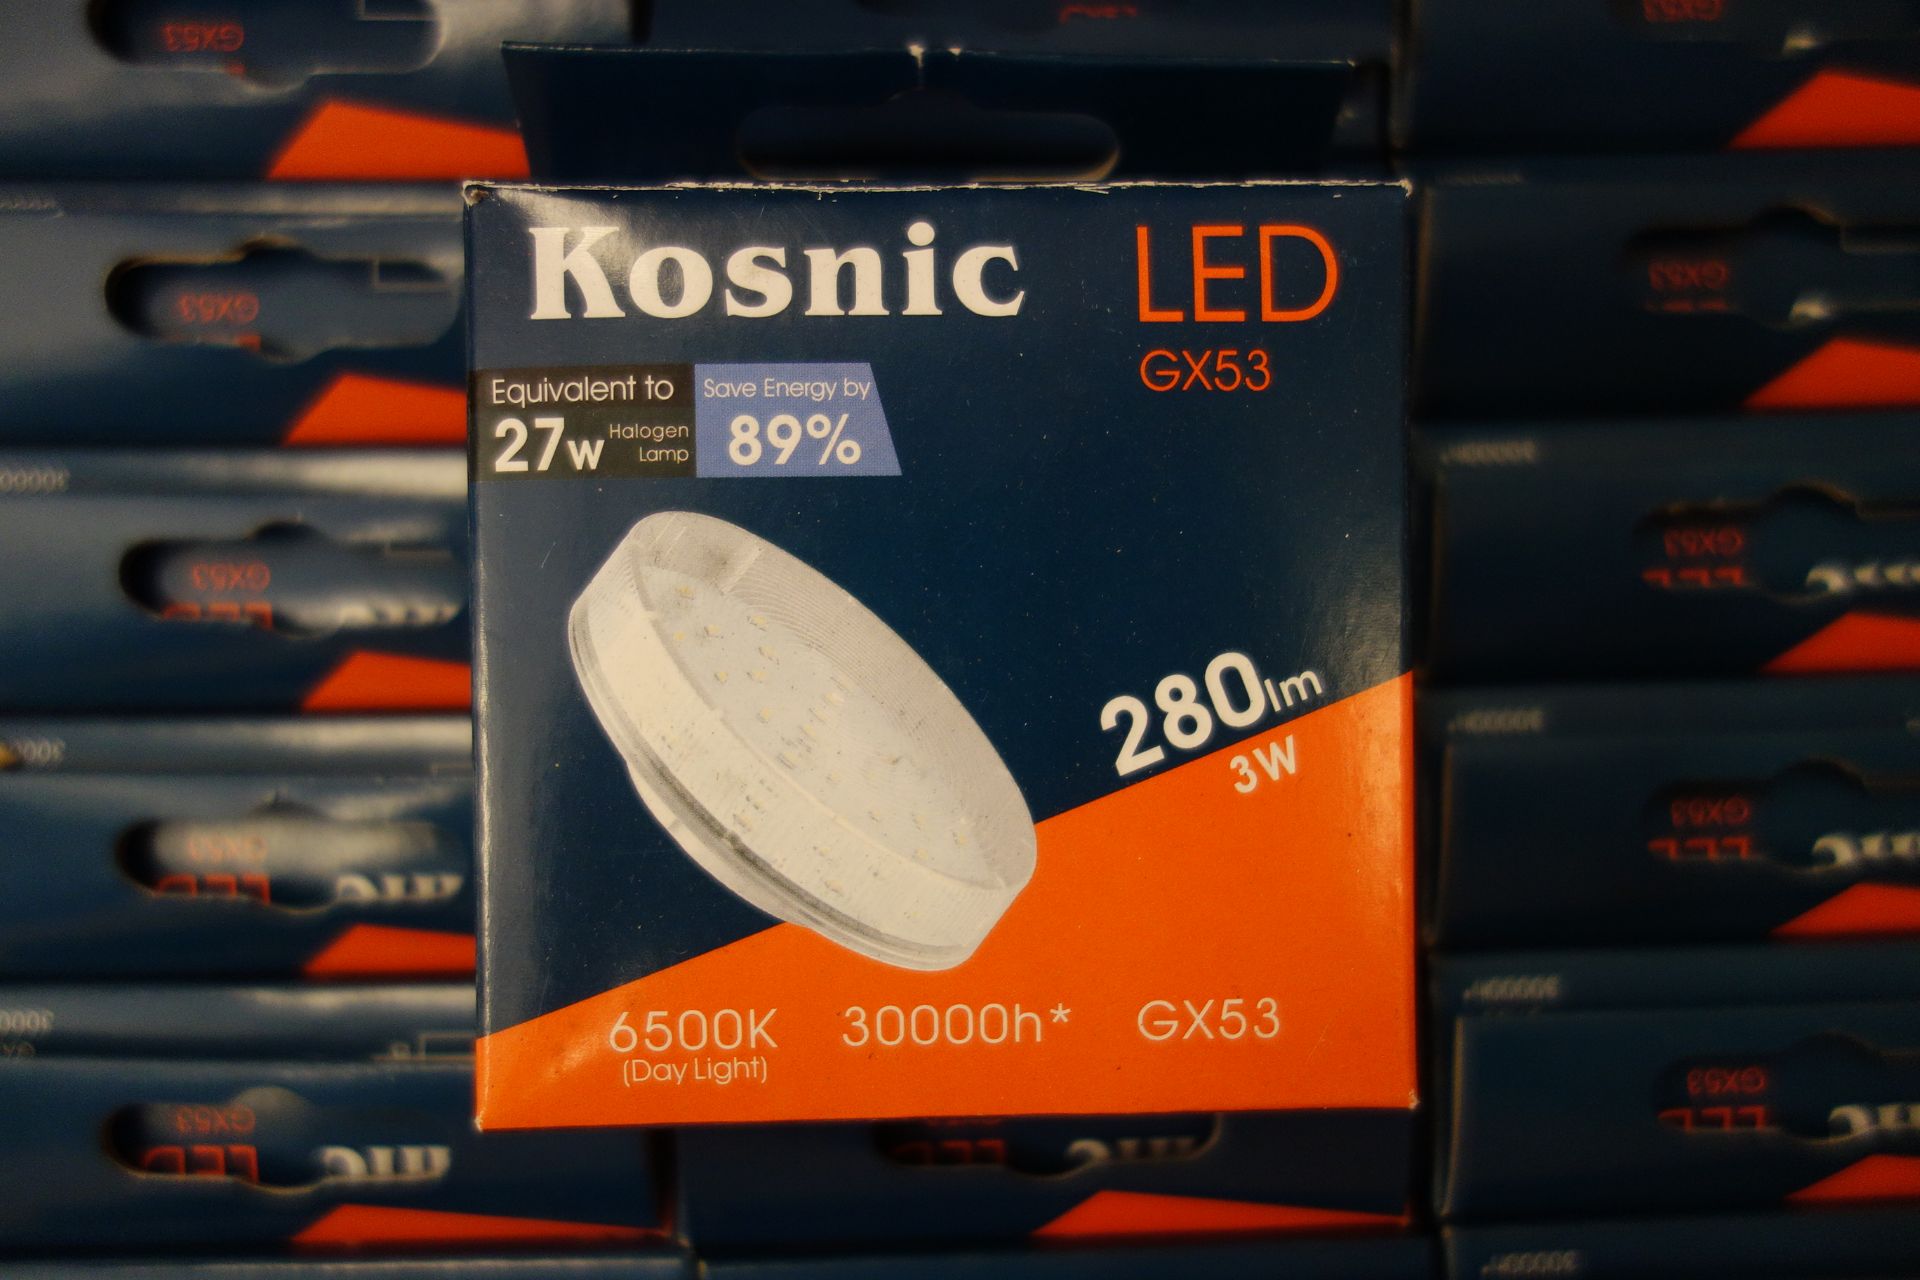 82 X KOSNIC GX53 LED 3w 6500K Daylight Lamps Equivalent to 27w